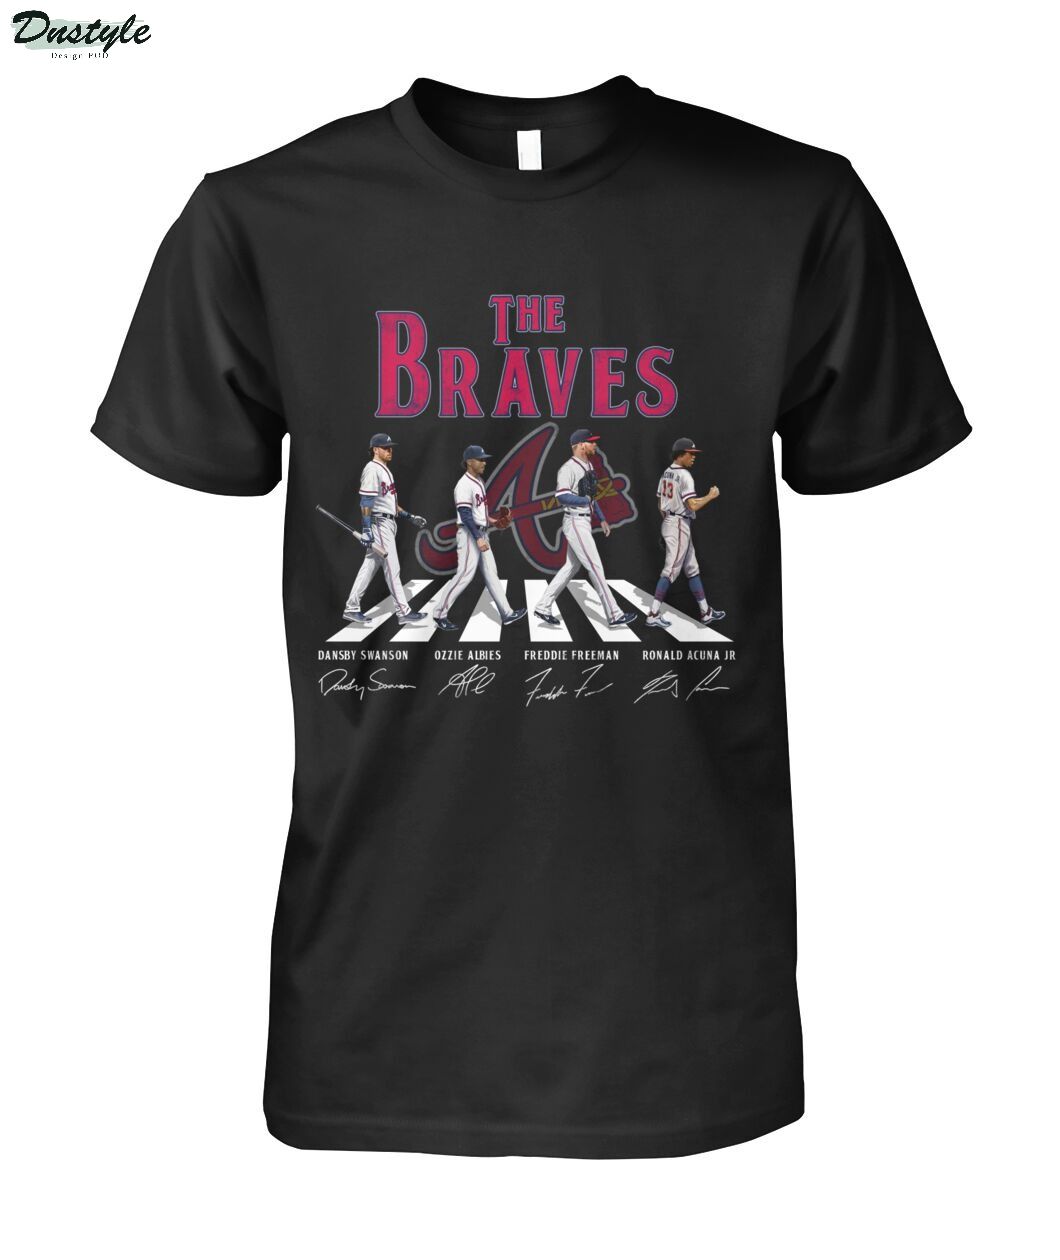 The braves walking across the street shirt